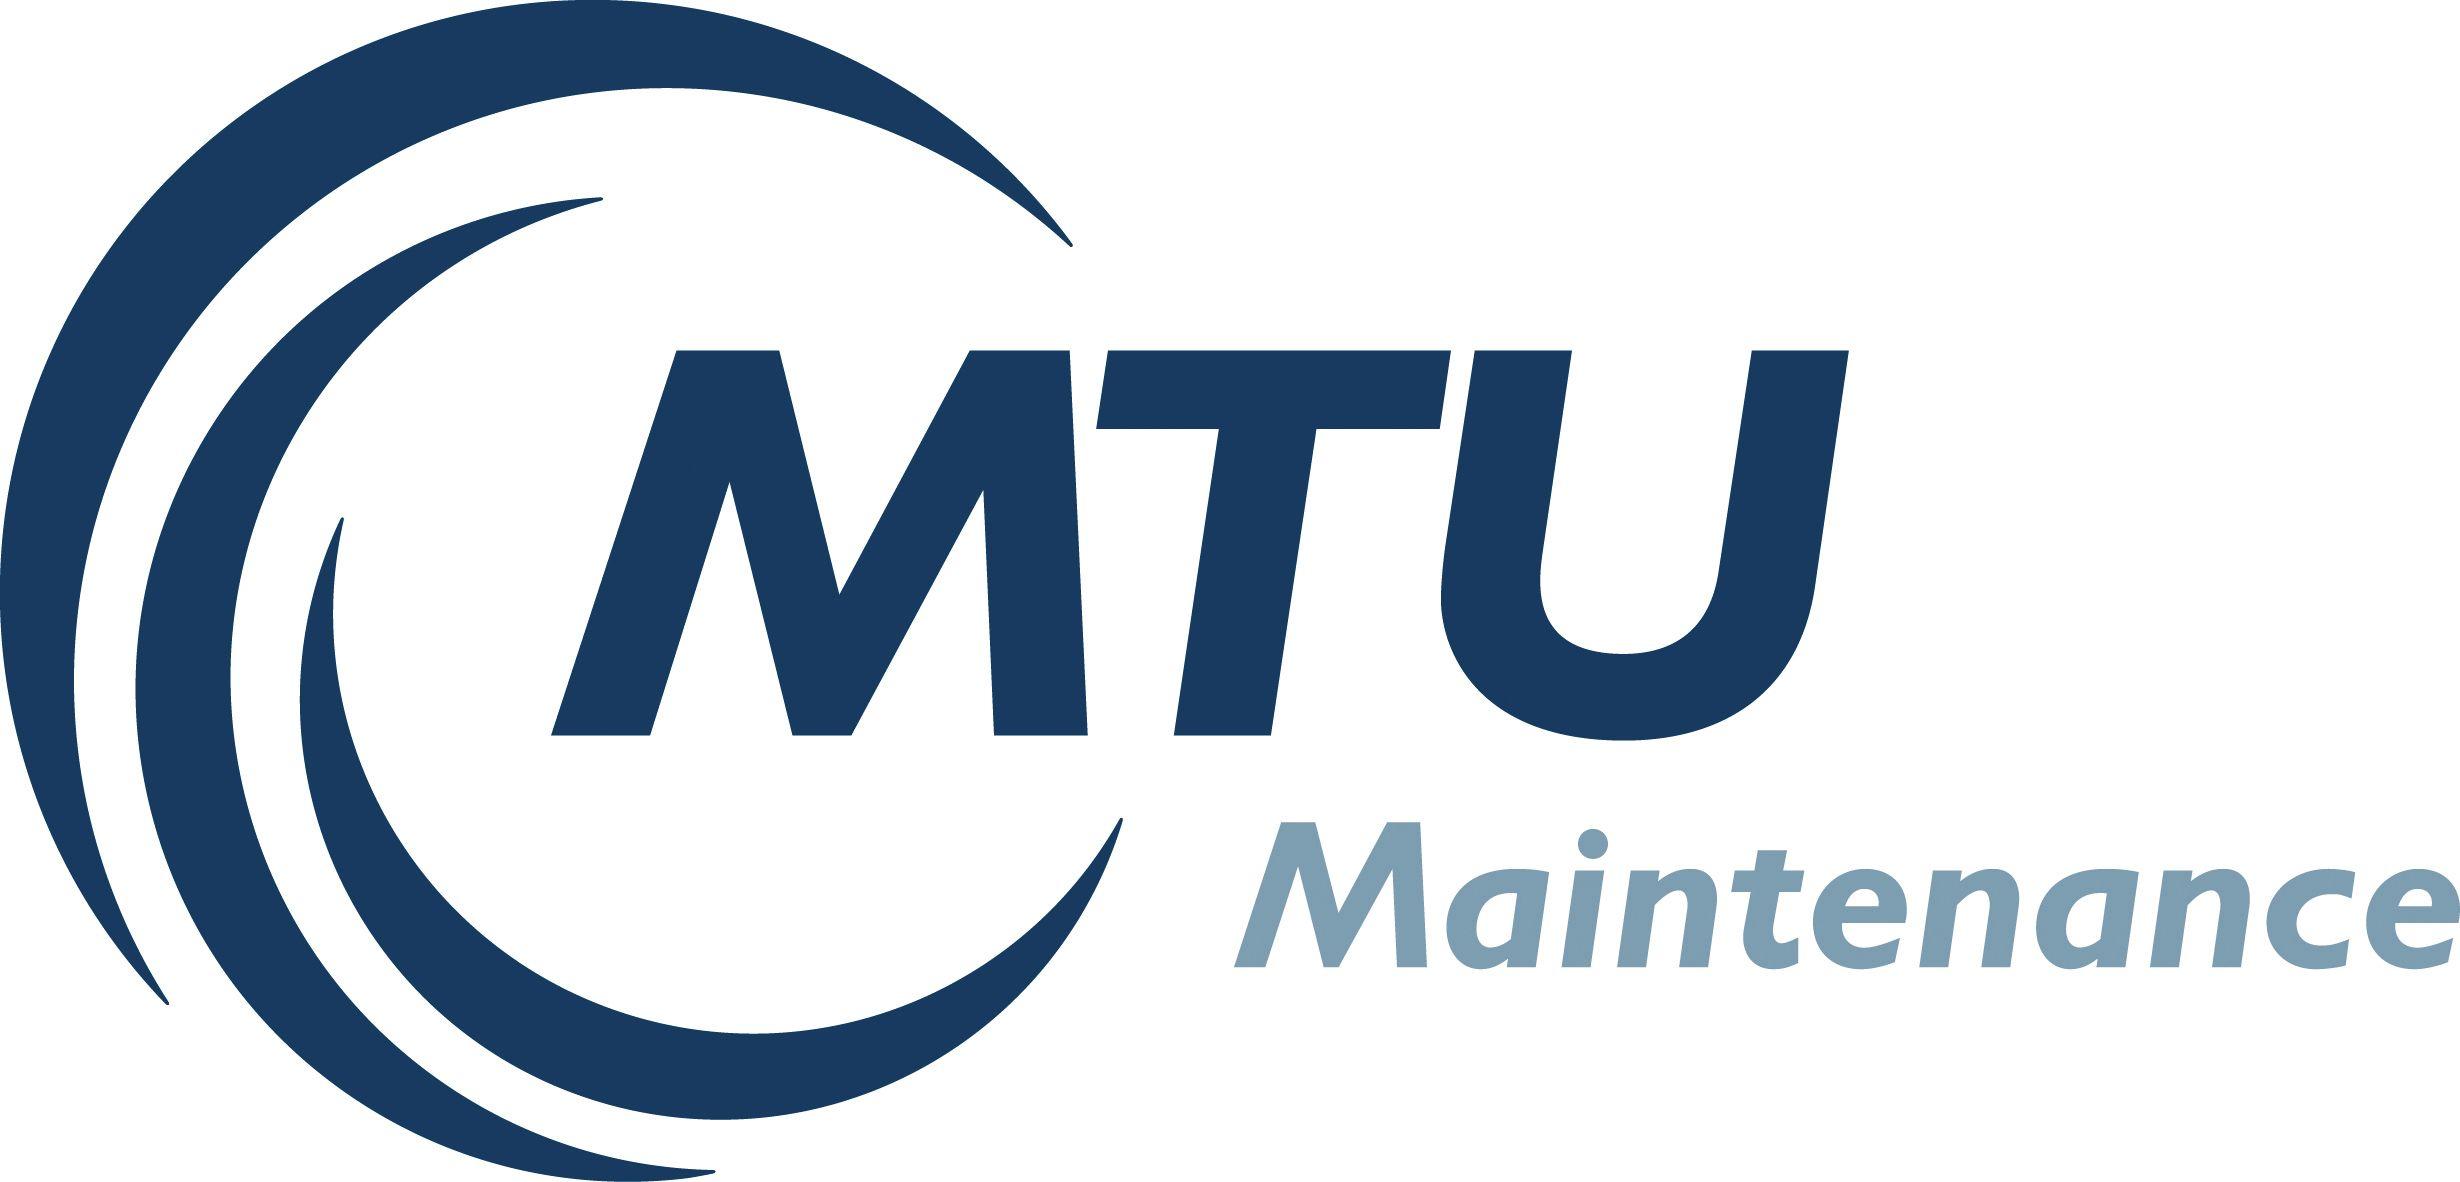 Canda Logo - MTU-Maintenance-Canda-logo - Skies Mag